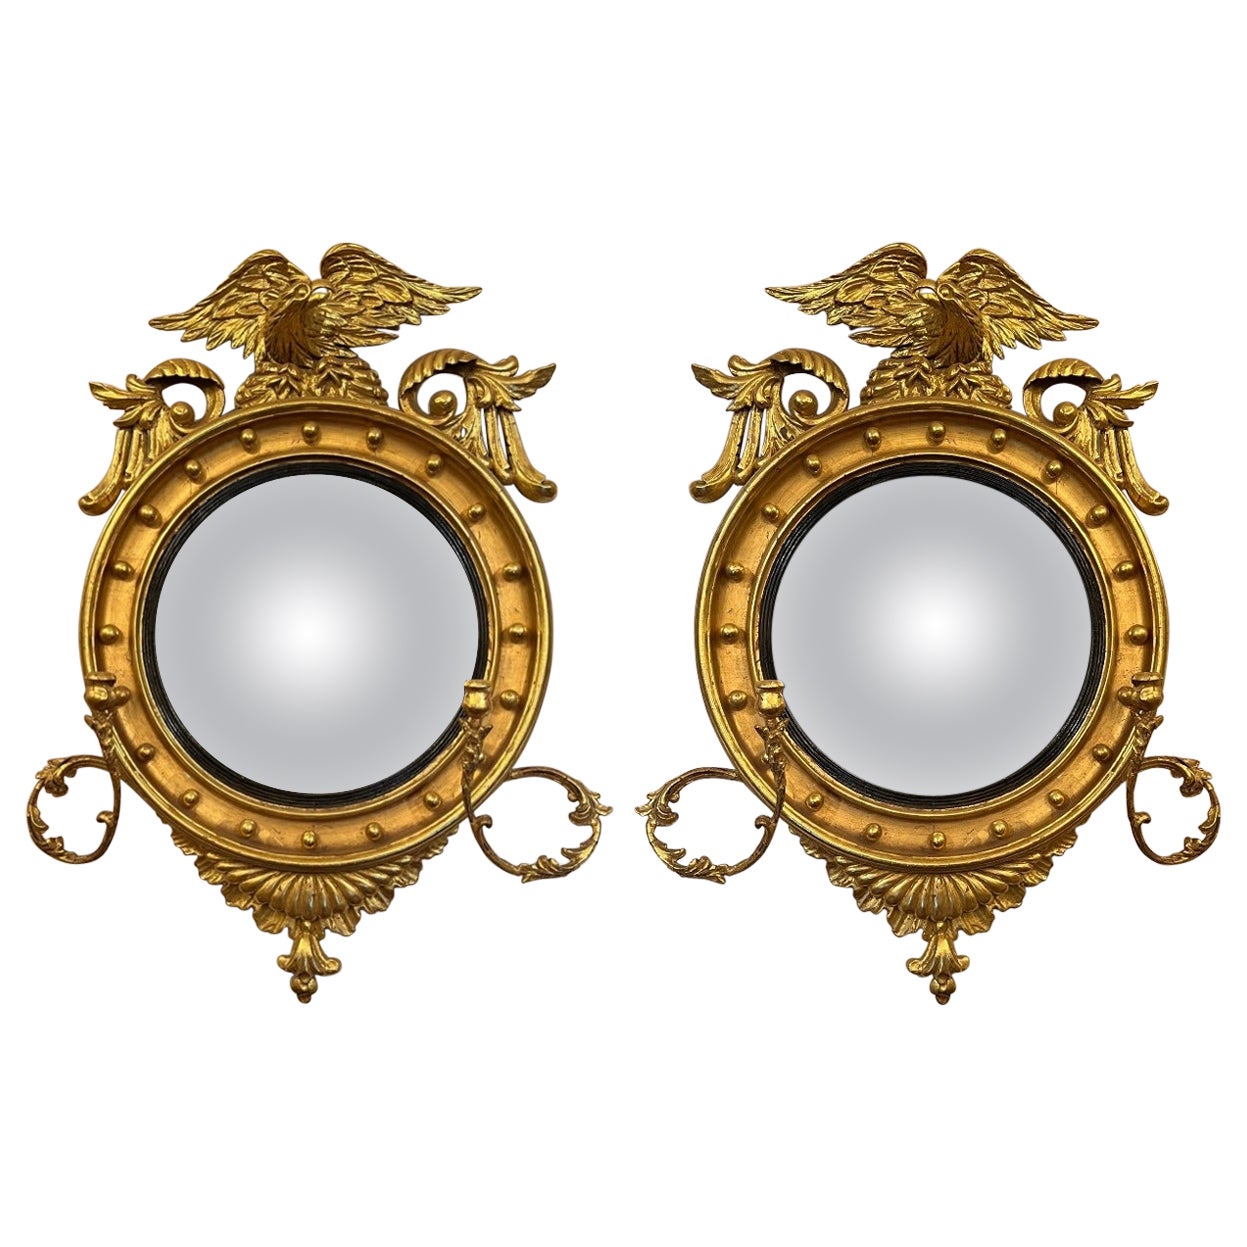 Rare paire de miroirs « Bullseye » convexes fédéraux américains anciens, vers 1850-1870.